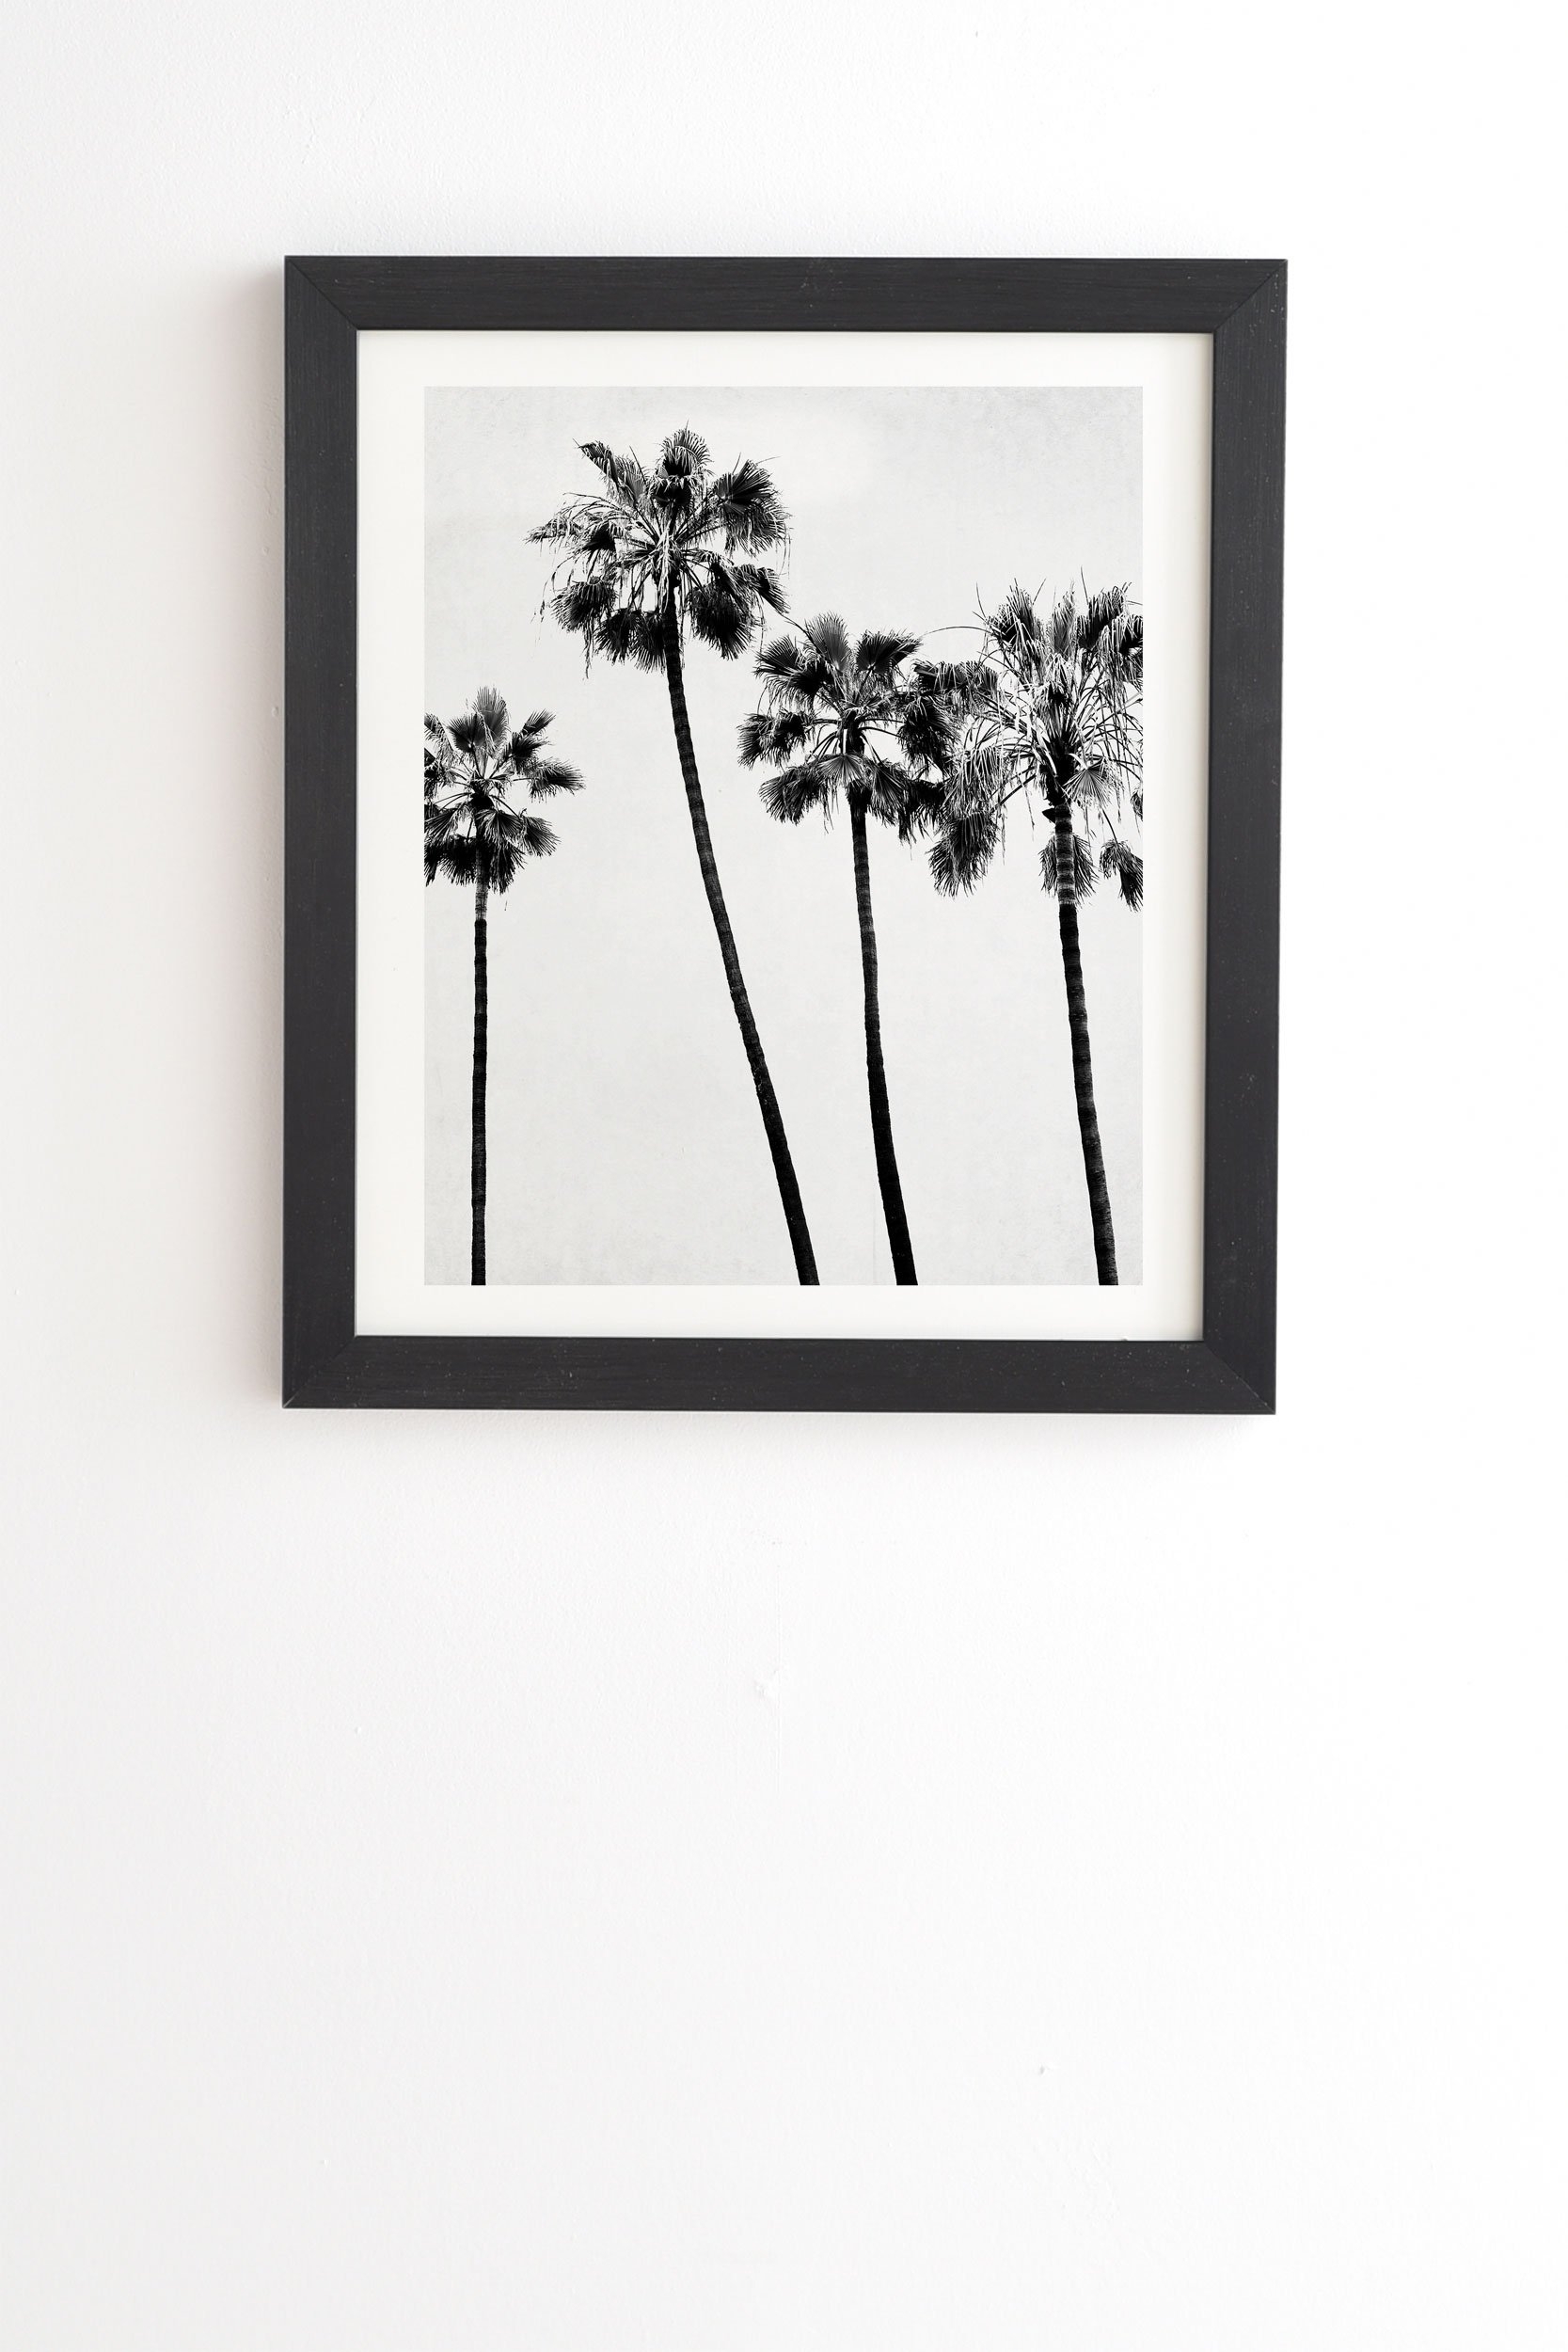 Bree Madden Palm Trees BW Black Framed Wall Art - 30" x 30" - Image 1